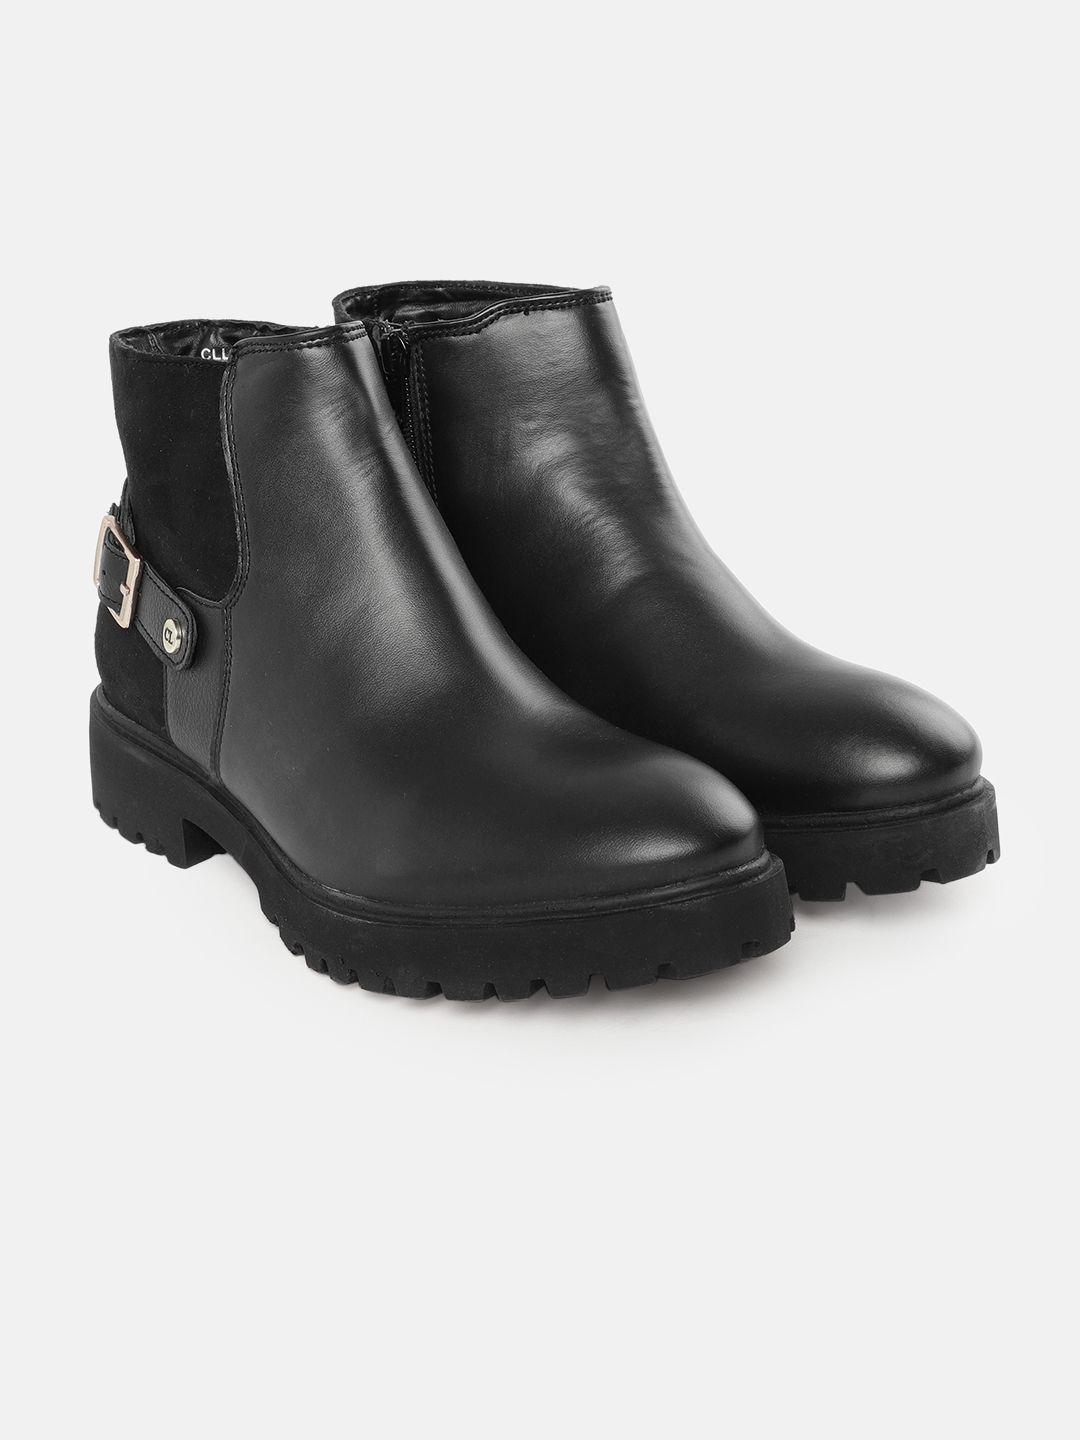 carlton-london-women-black-solid-flat-boots